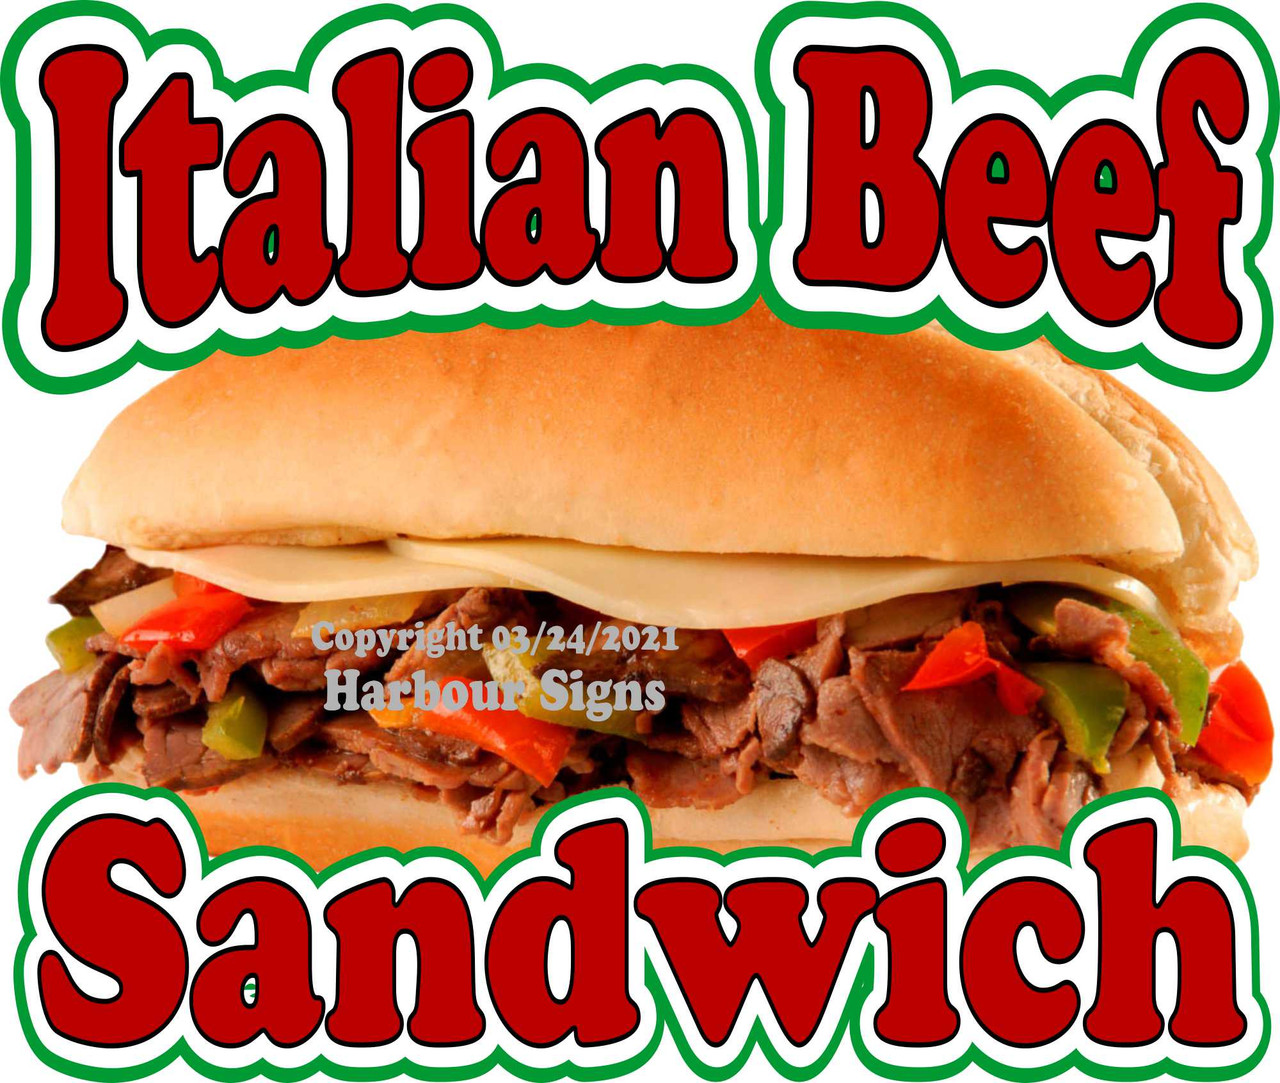 Italian Sausage Sub Sandwich Concession Food Truck Vinyl Sign Sticker Decal 14" 